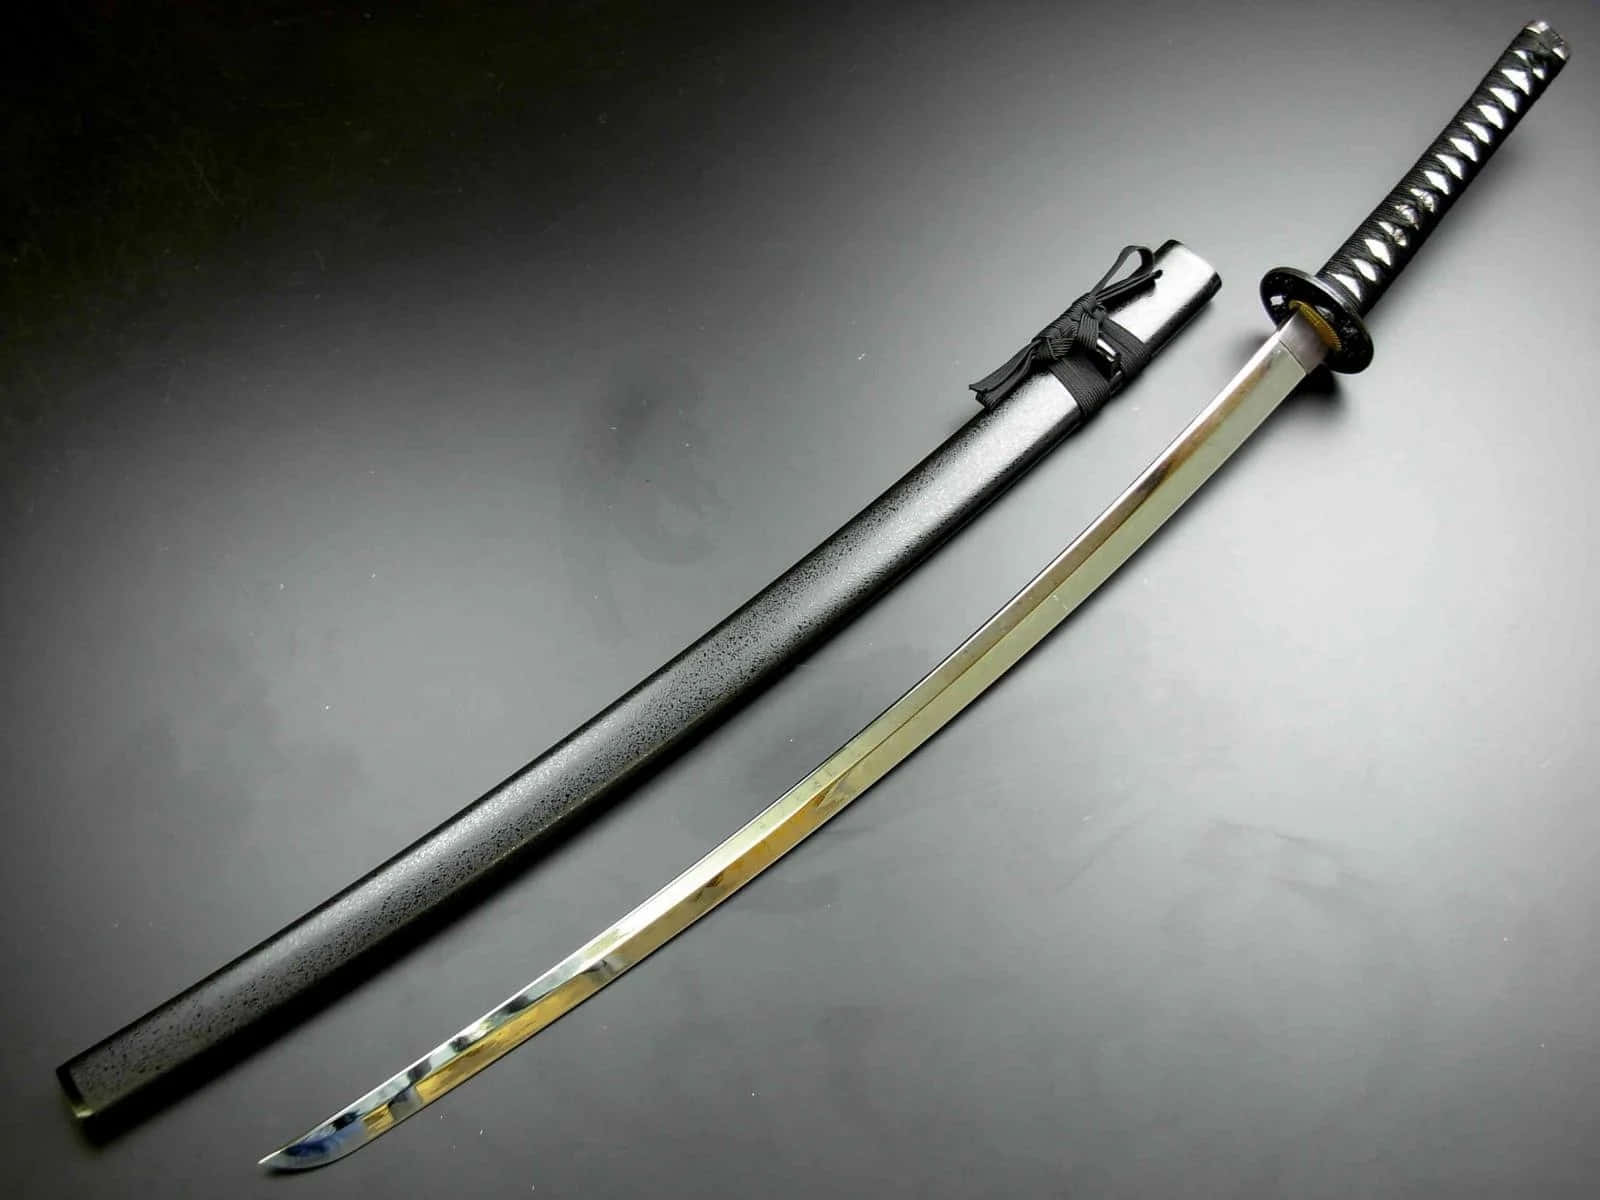 samurai sword katana wallpaper